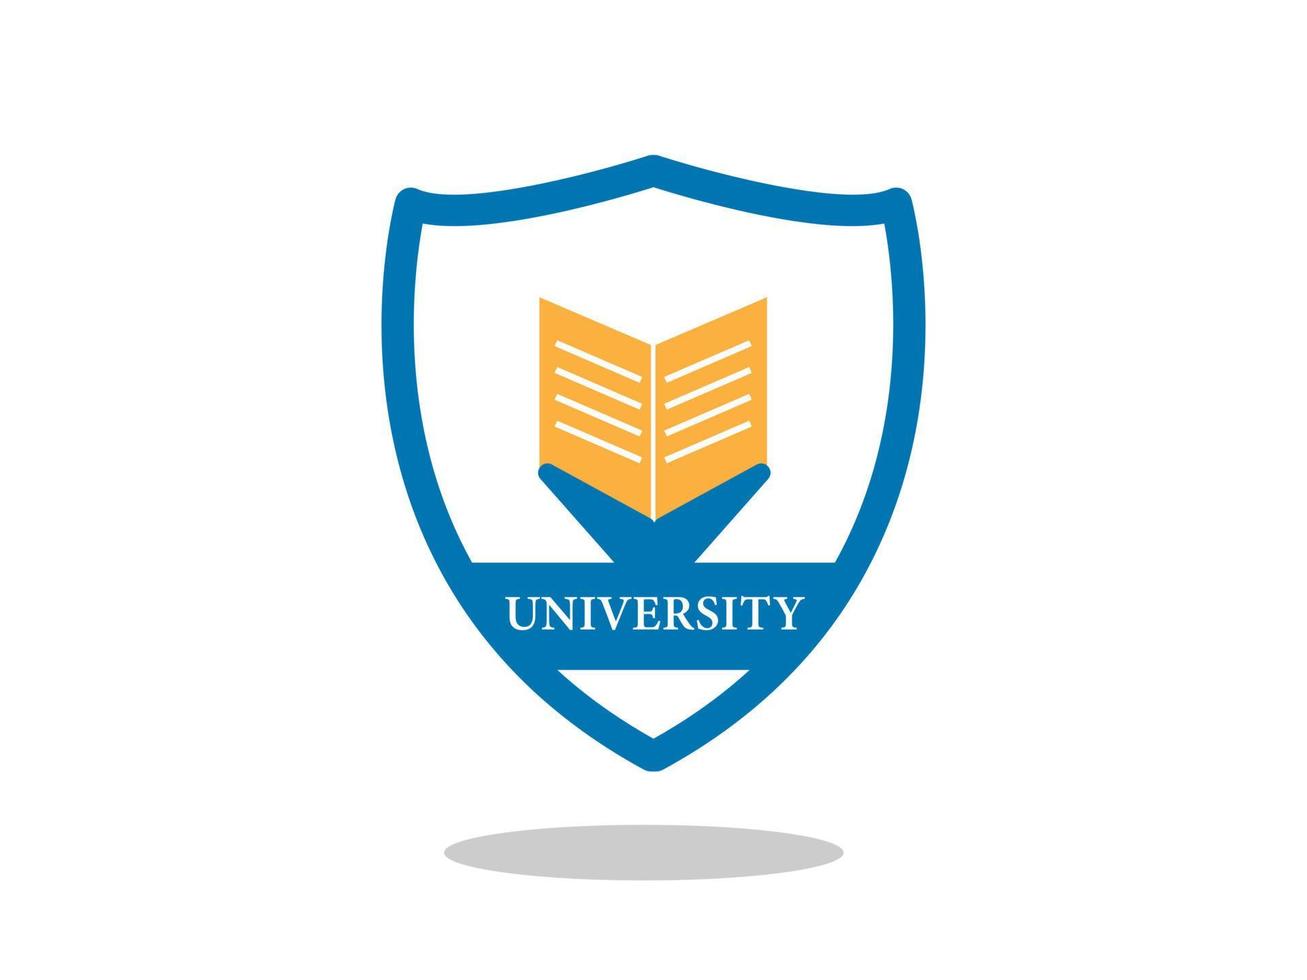 University logo or education logo concept vector illustration. University logo design template.